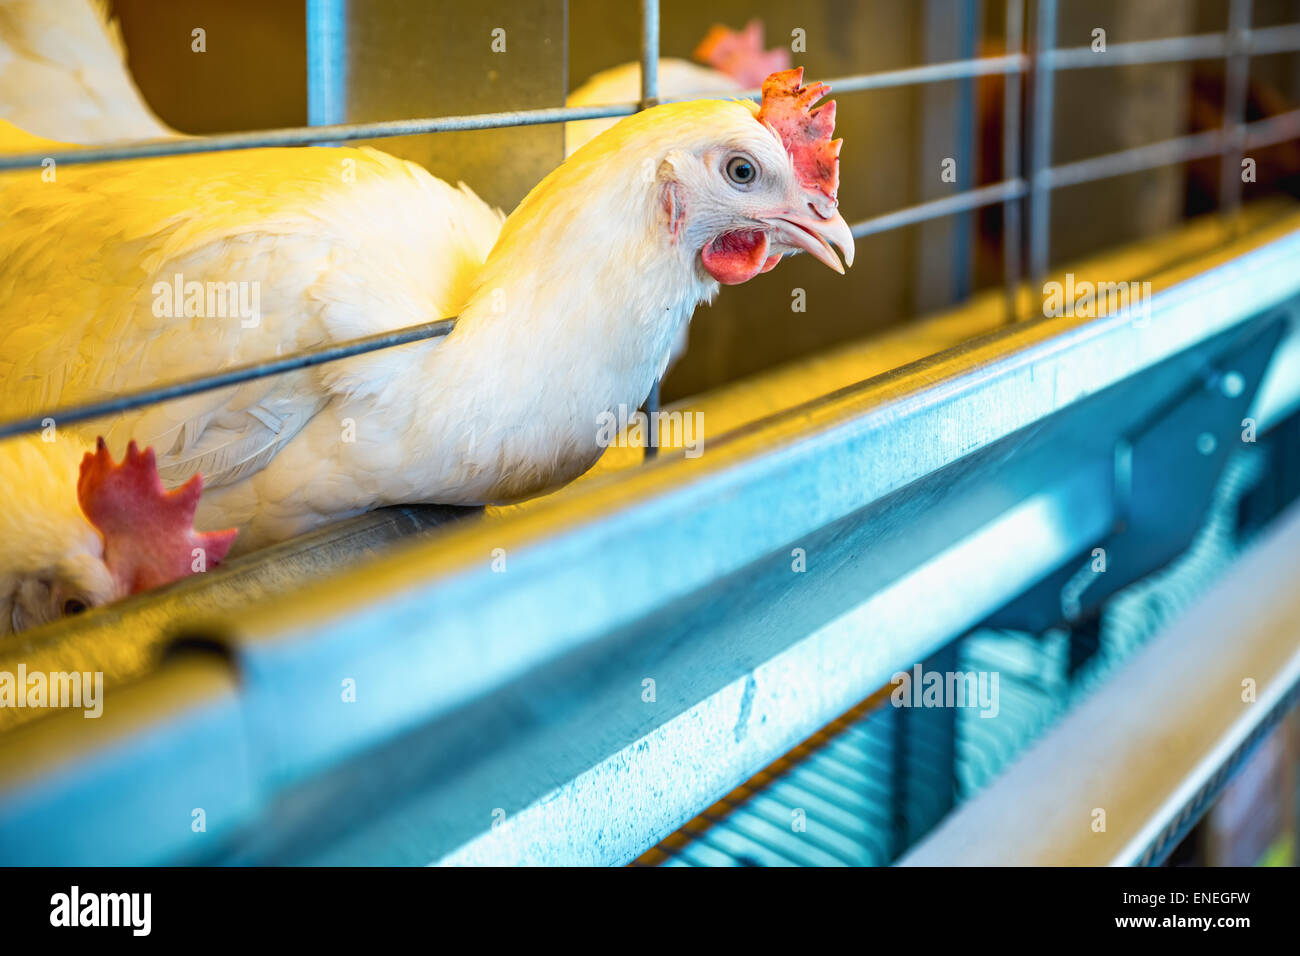 Chicken in farm incubator or coop. Farmland industry Stock Photo